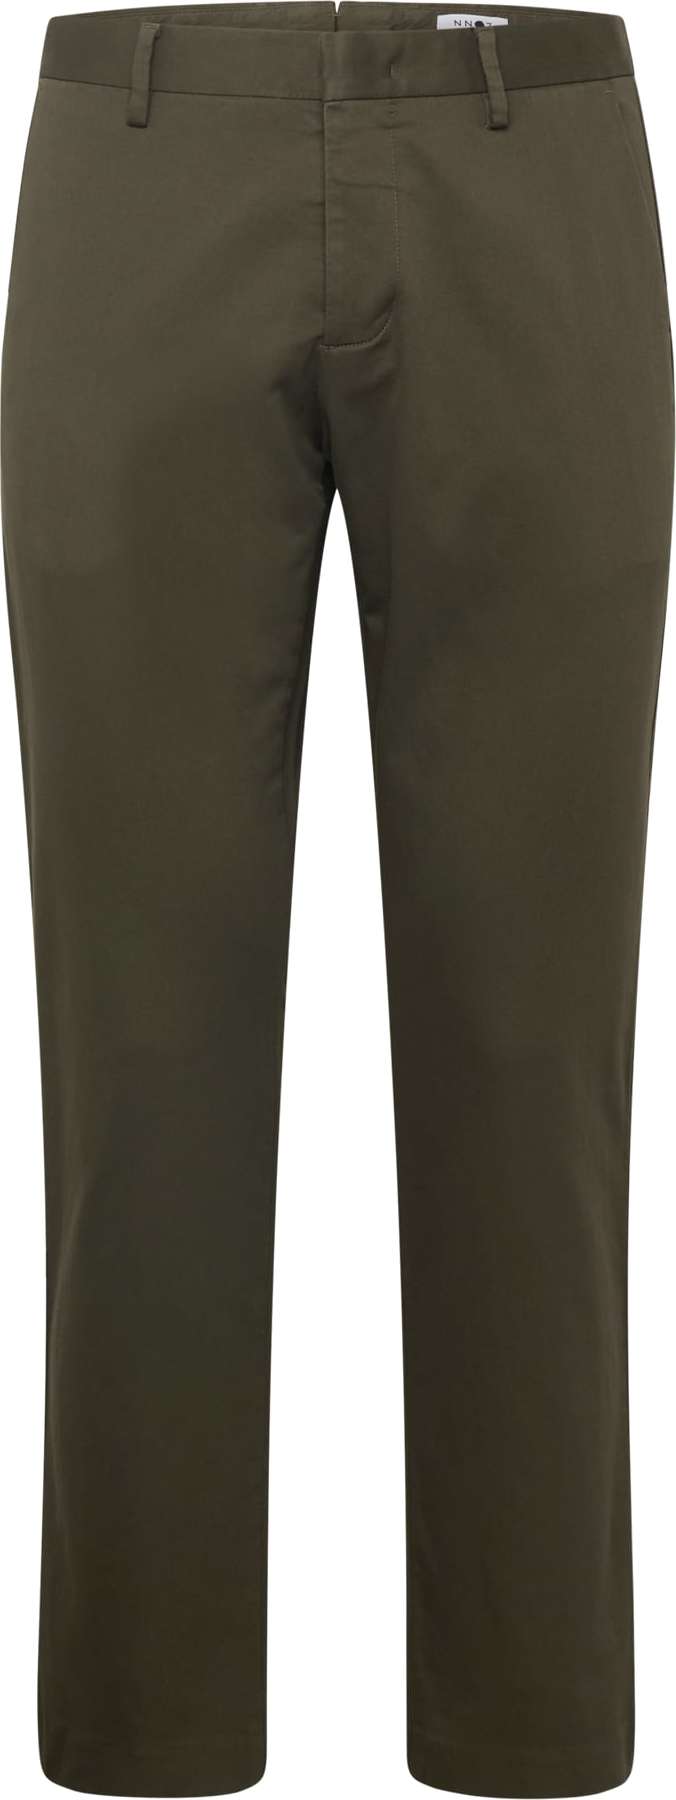 Chino kalhoty 'Theo 1420' NN07 khaki